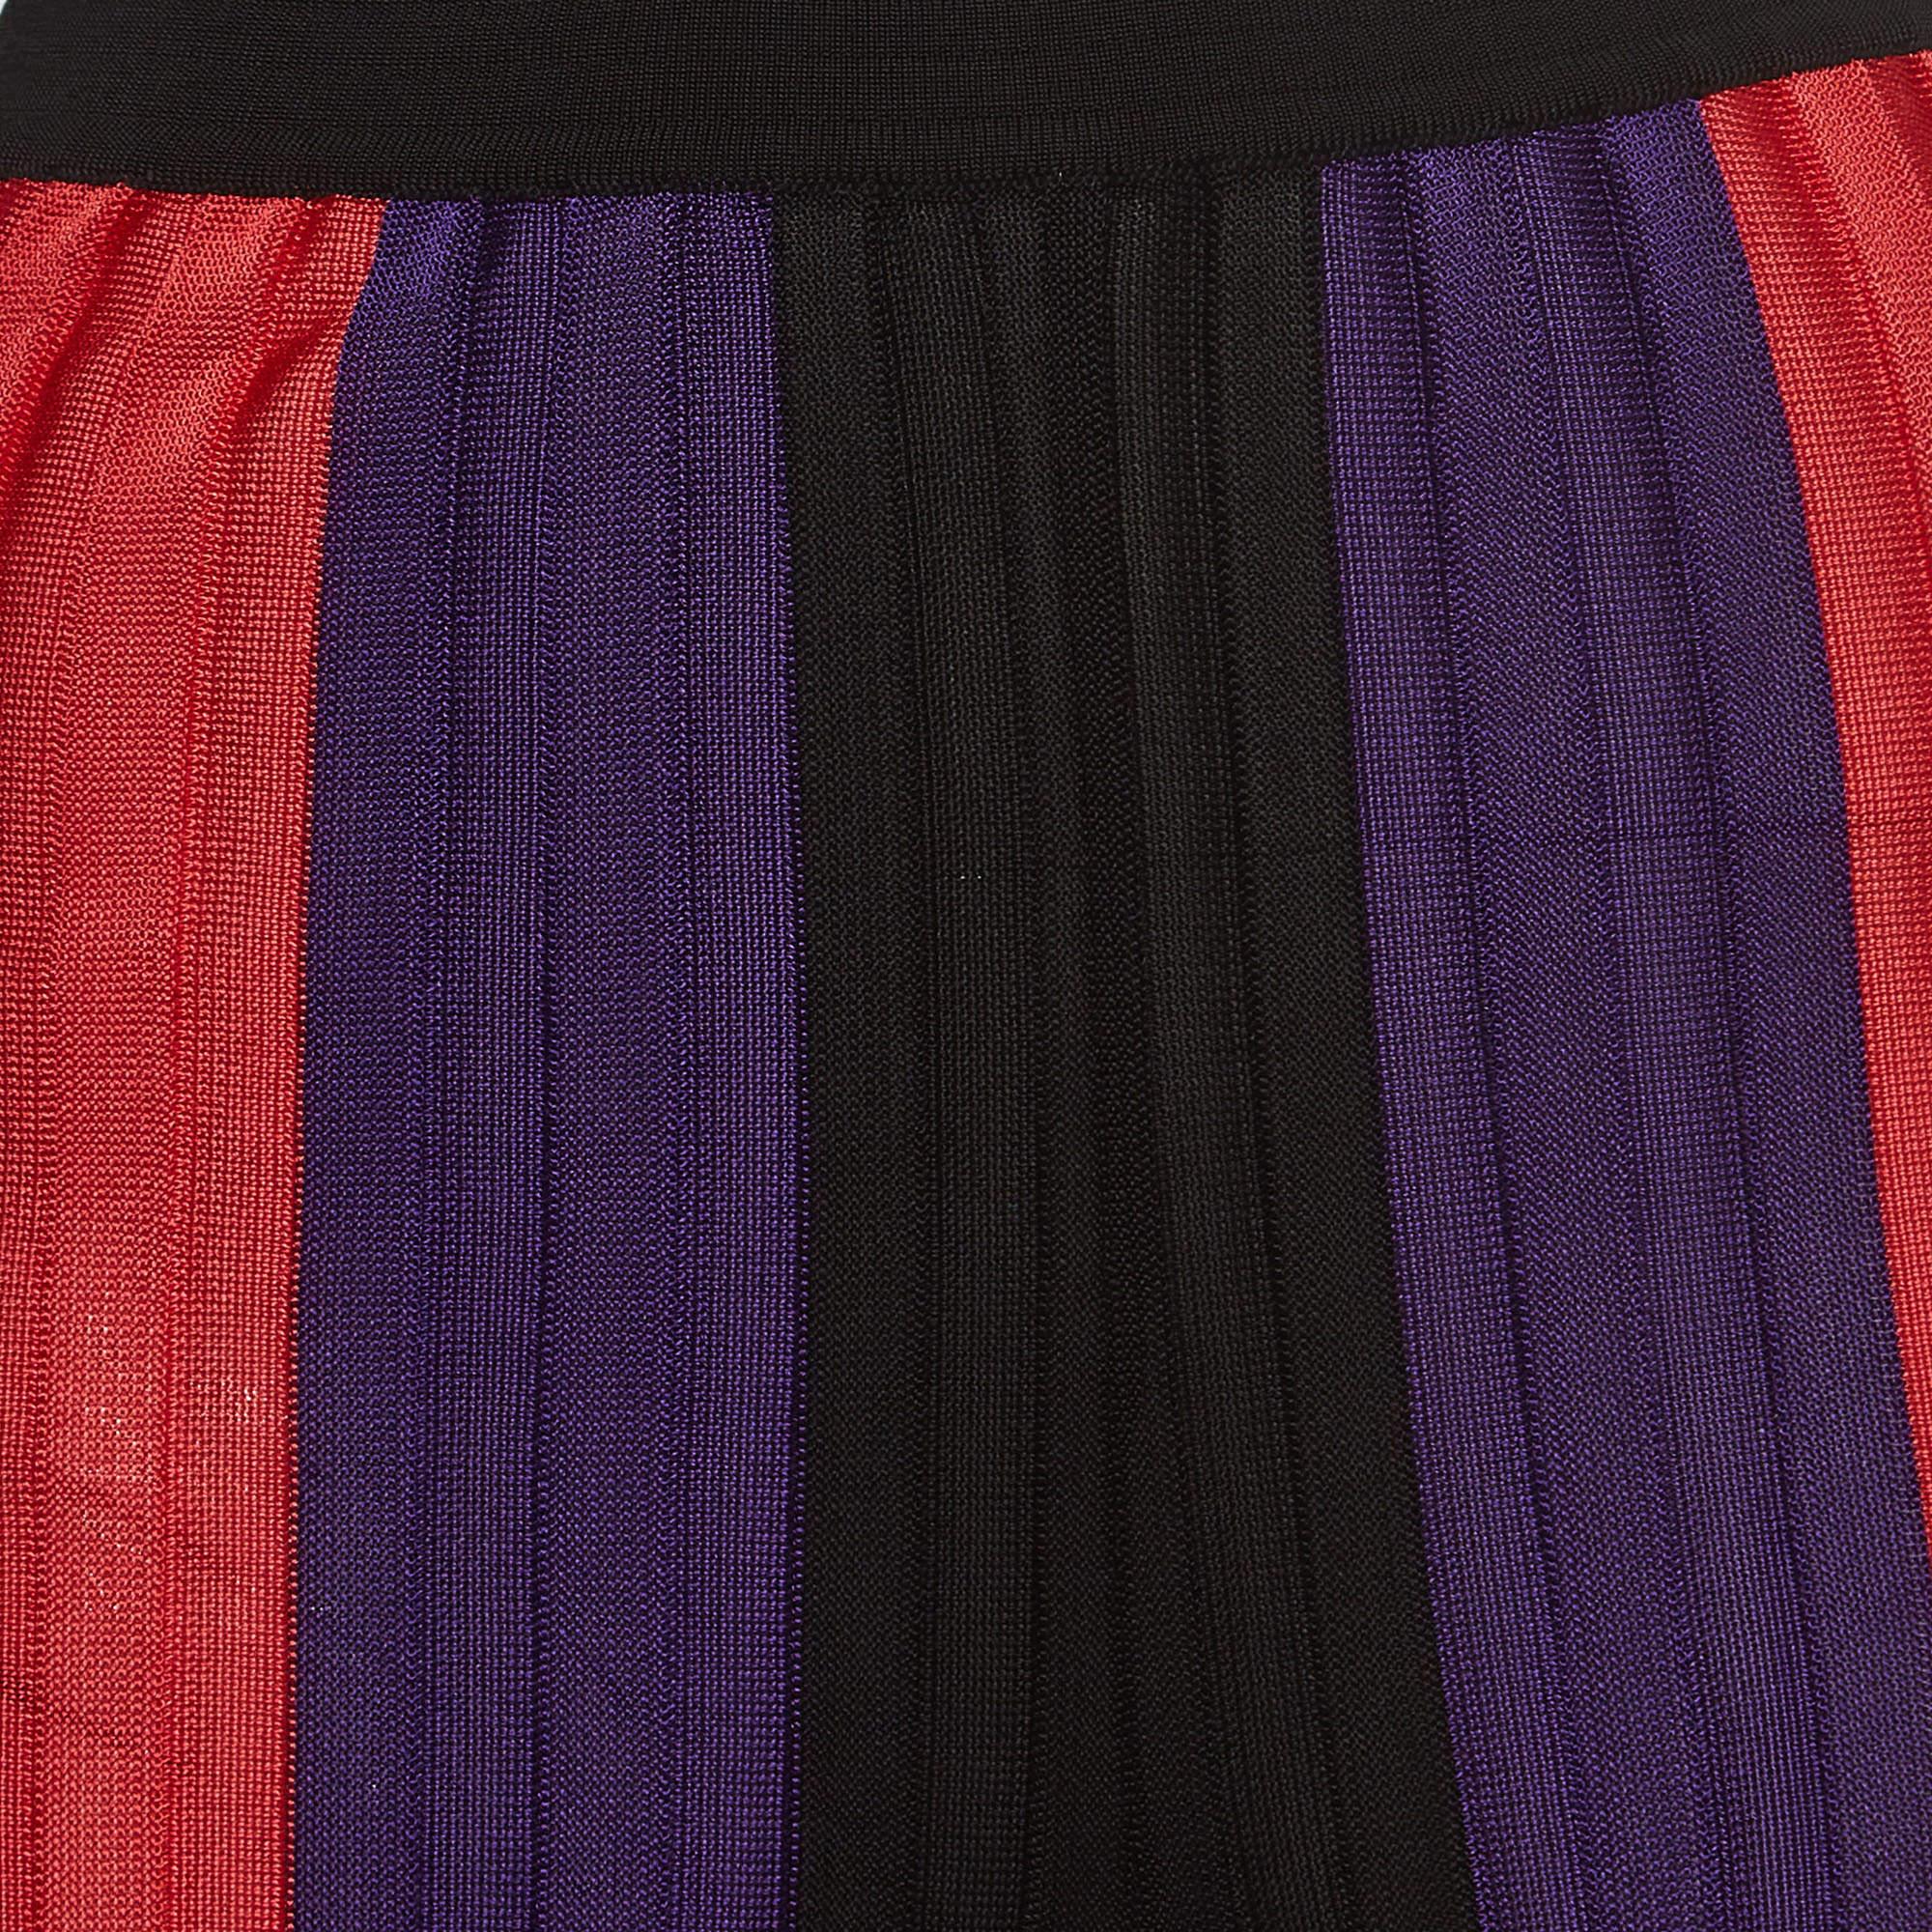 Balmain Multicolor Patterned Knit Elasticated Waist Pants S In Good Condition For Sale In Dubai, Al Qouz 2